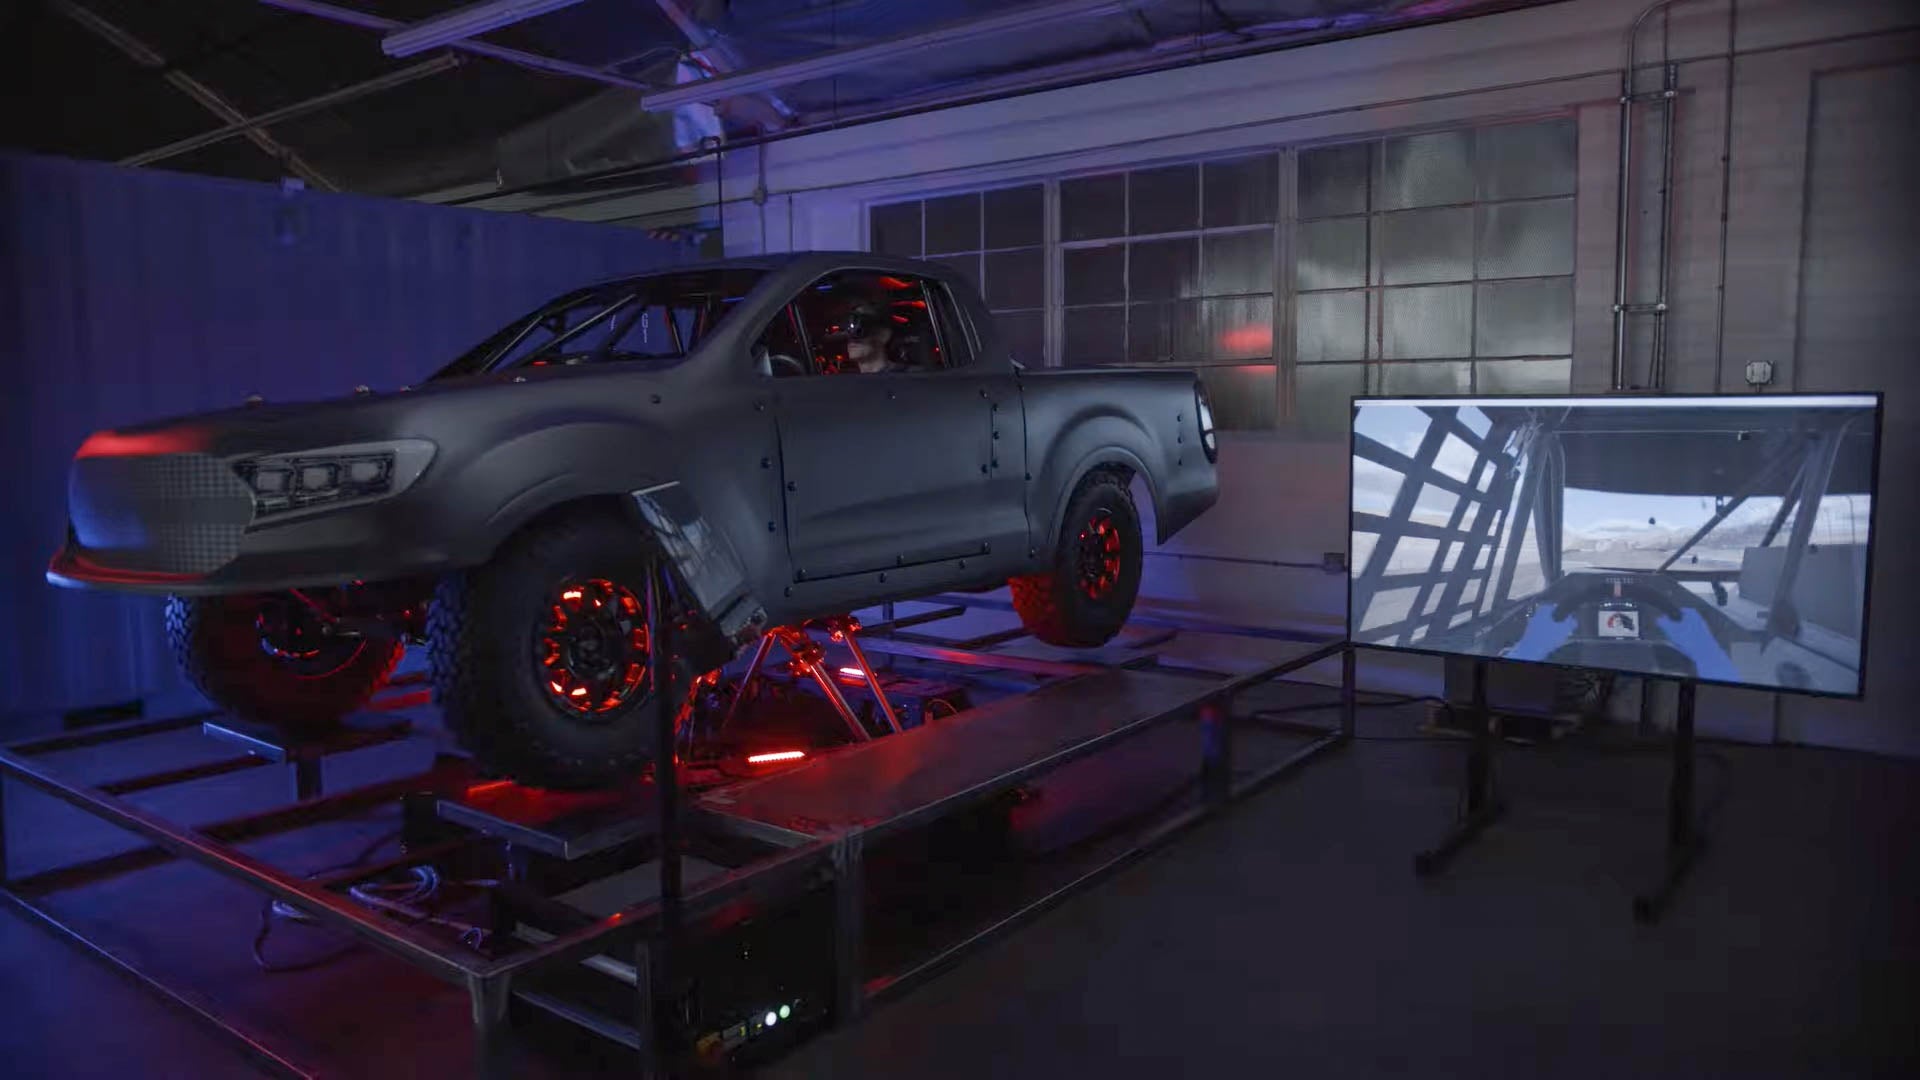 This Realistic Trophy Truck Simulator Looks Like Loads of Fun